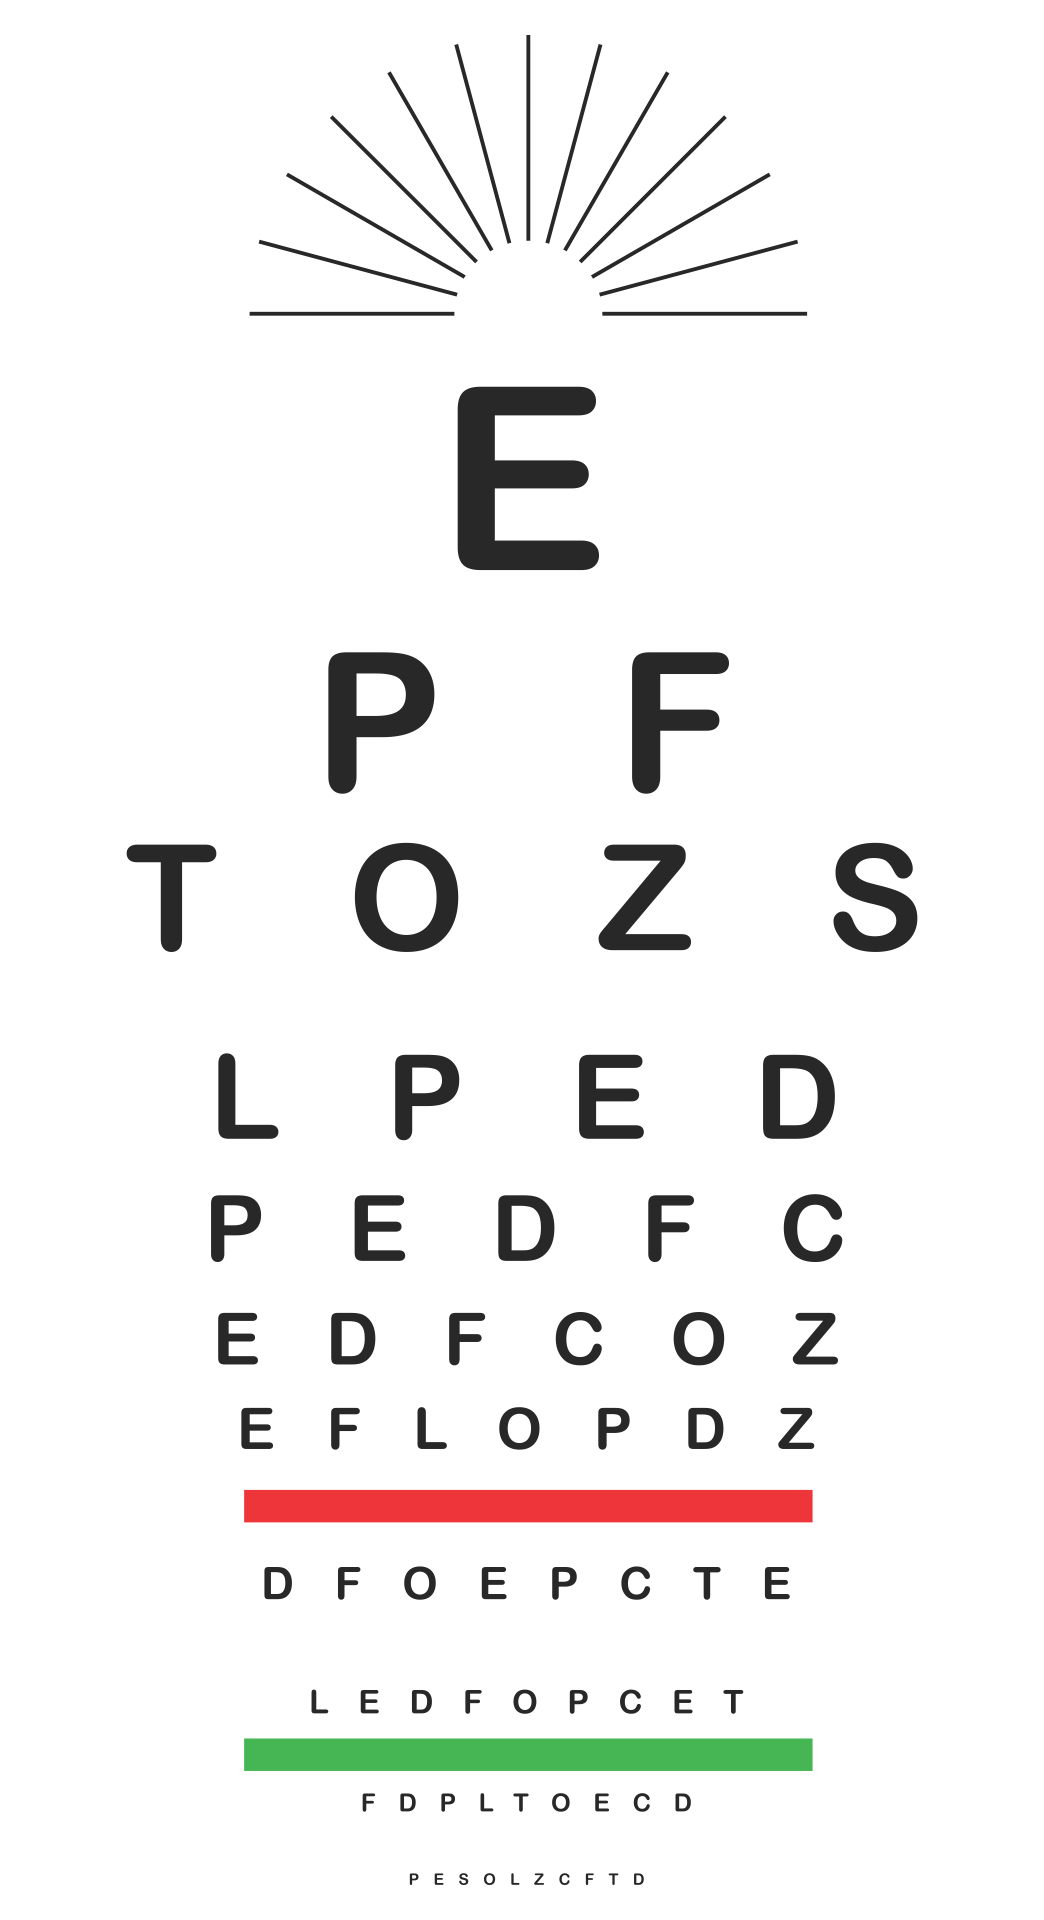 Free Printable Eye Charts Full Size Image to u